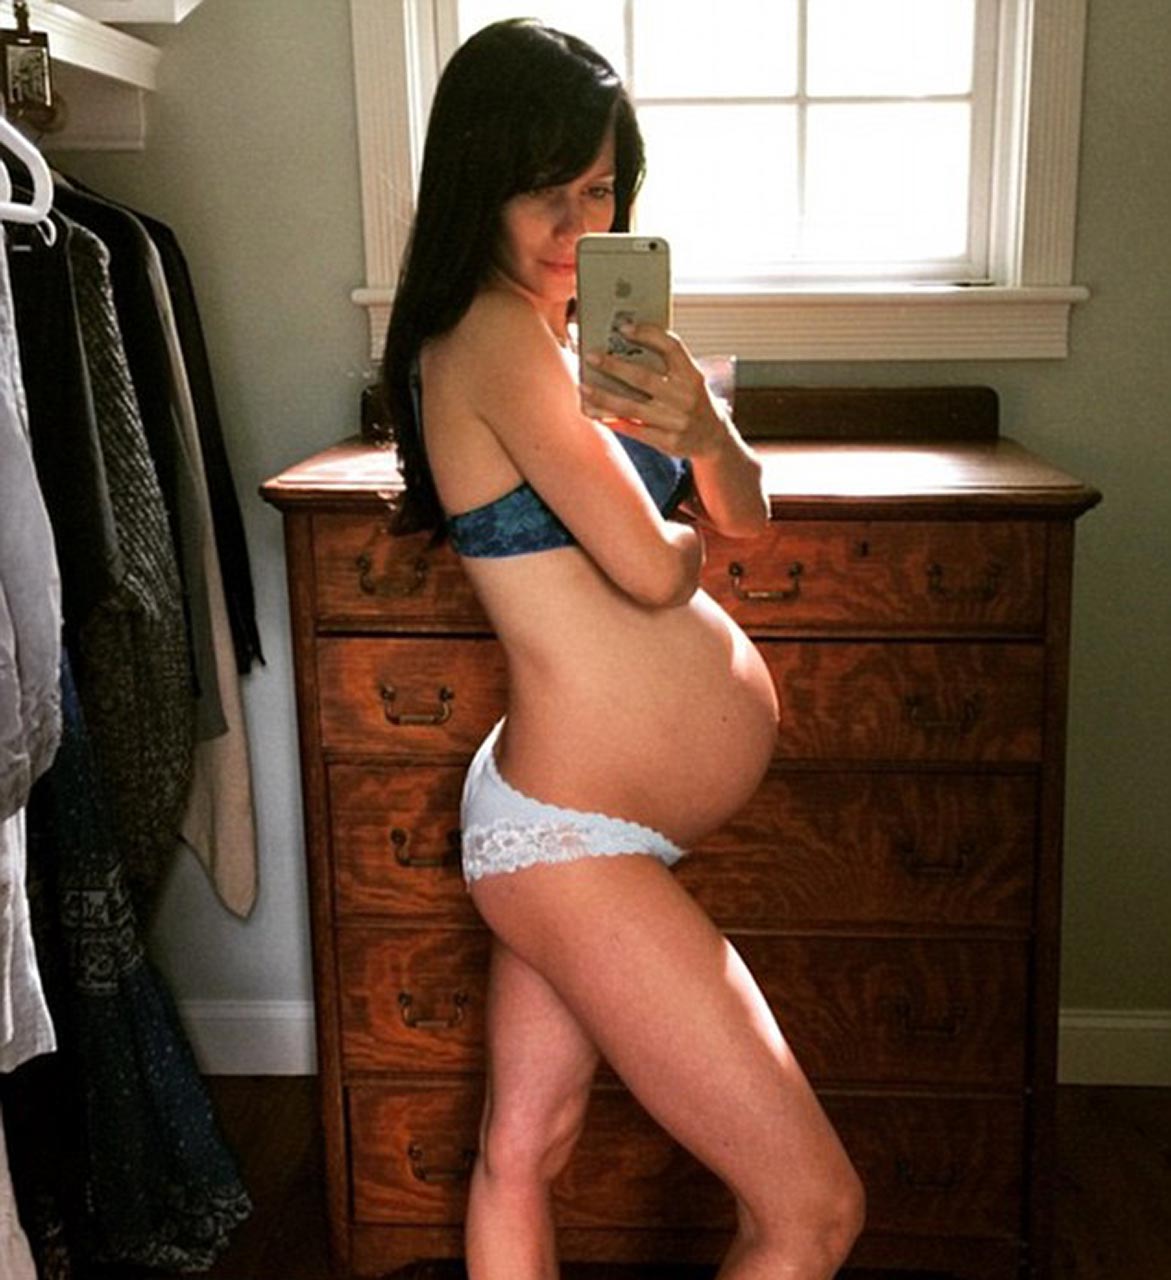 Hilaria Baldwin Thomas Nude Pantyless Selfie - Pregnant Pics With Children ...